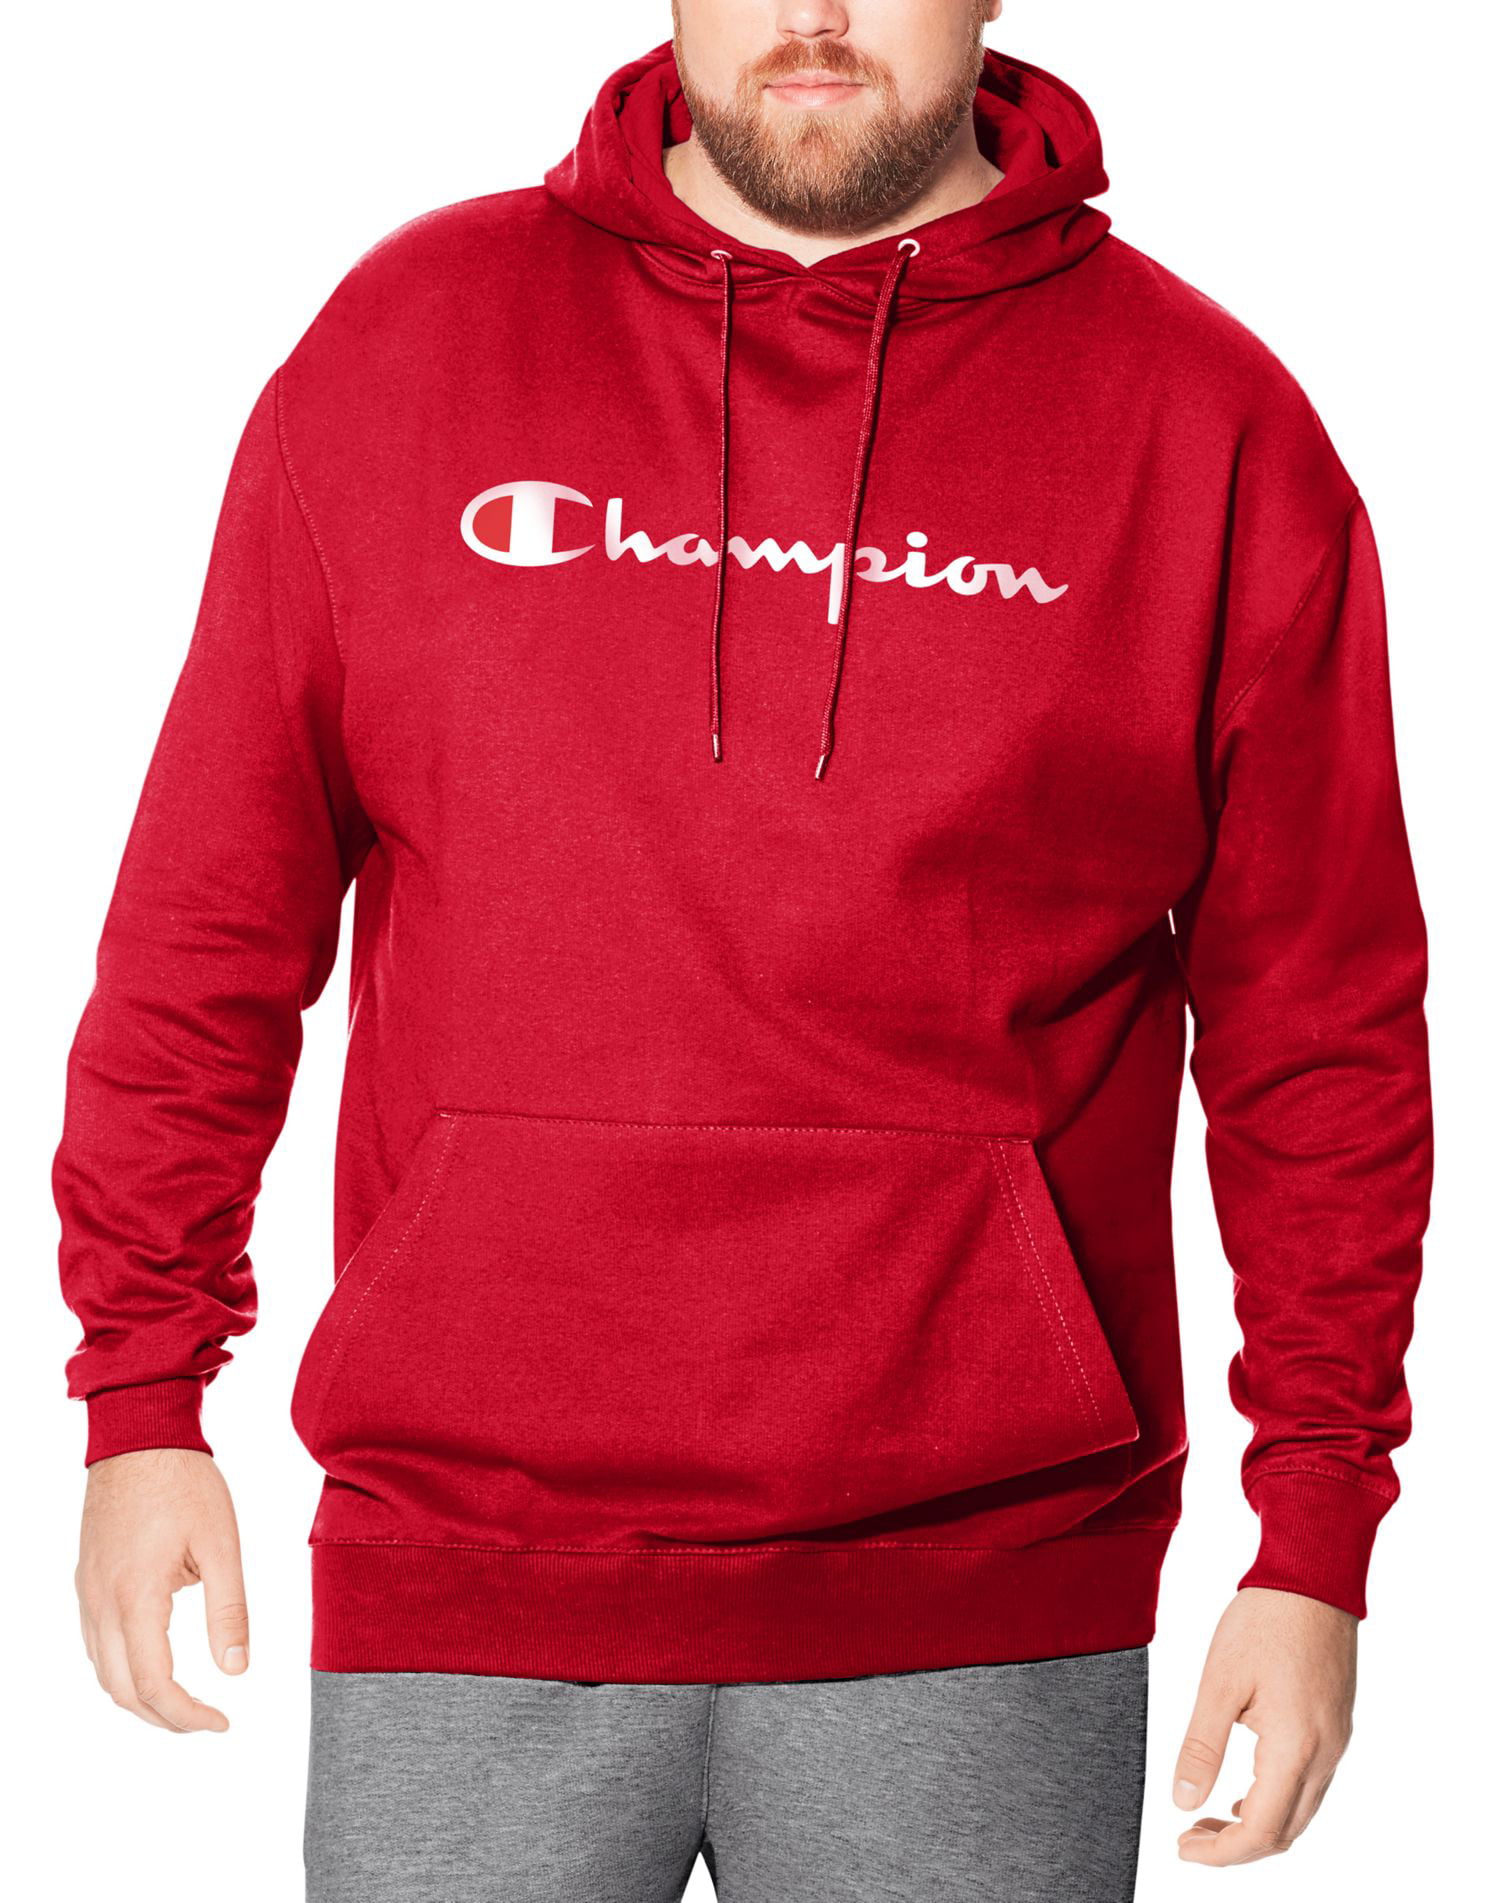 champion red hoodie men